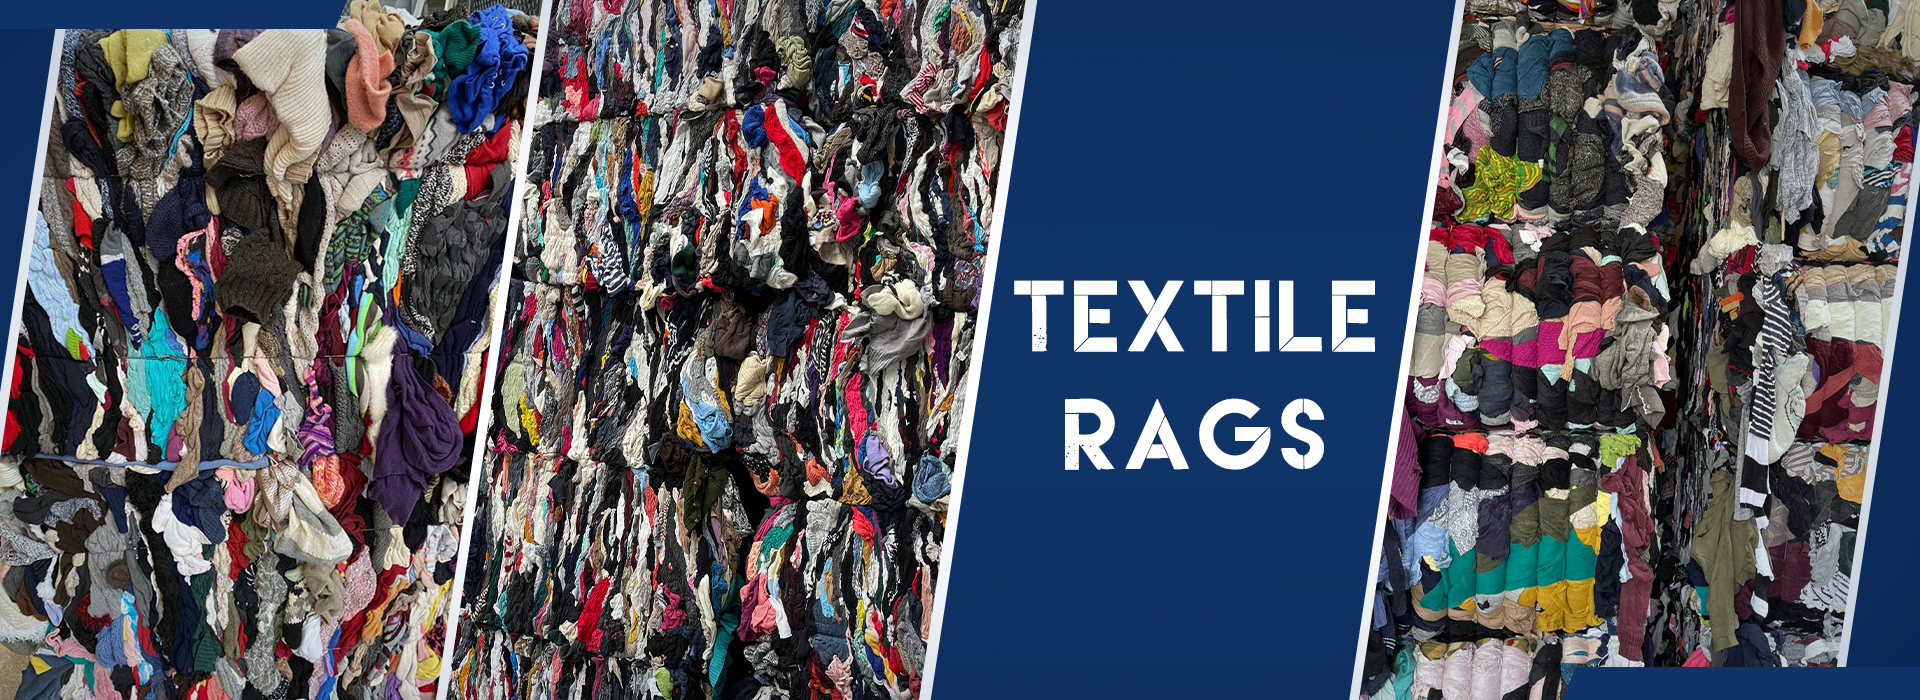 Textile Rags